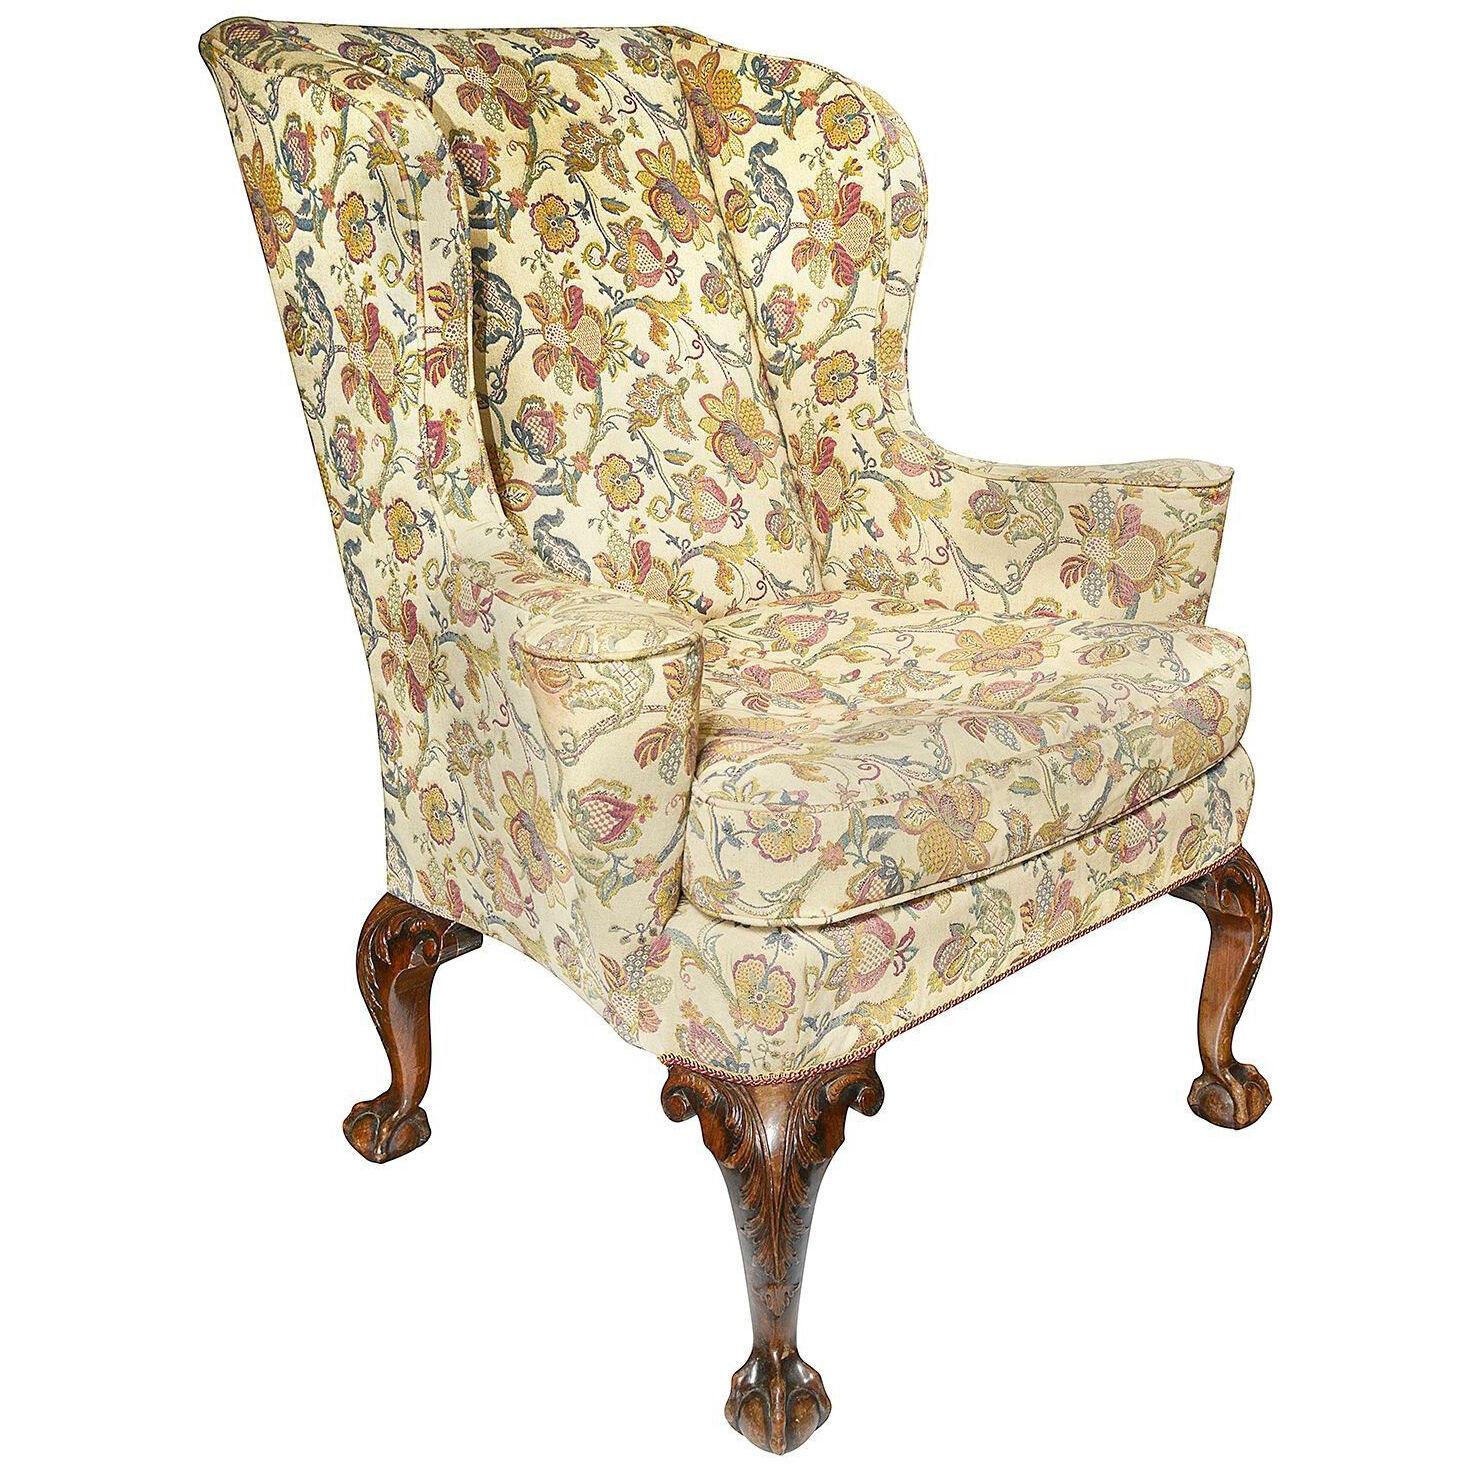 A George II style walnut wingback armchair